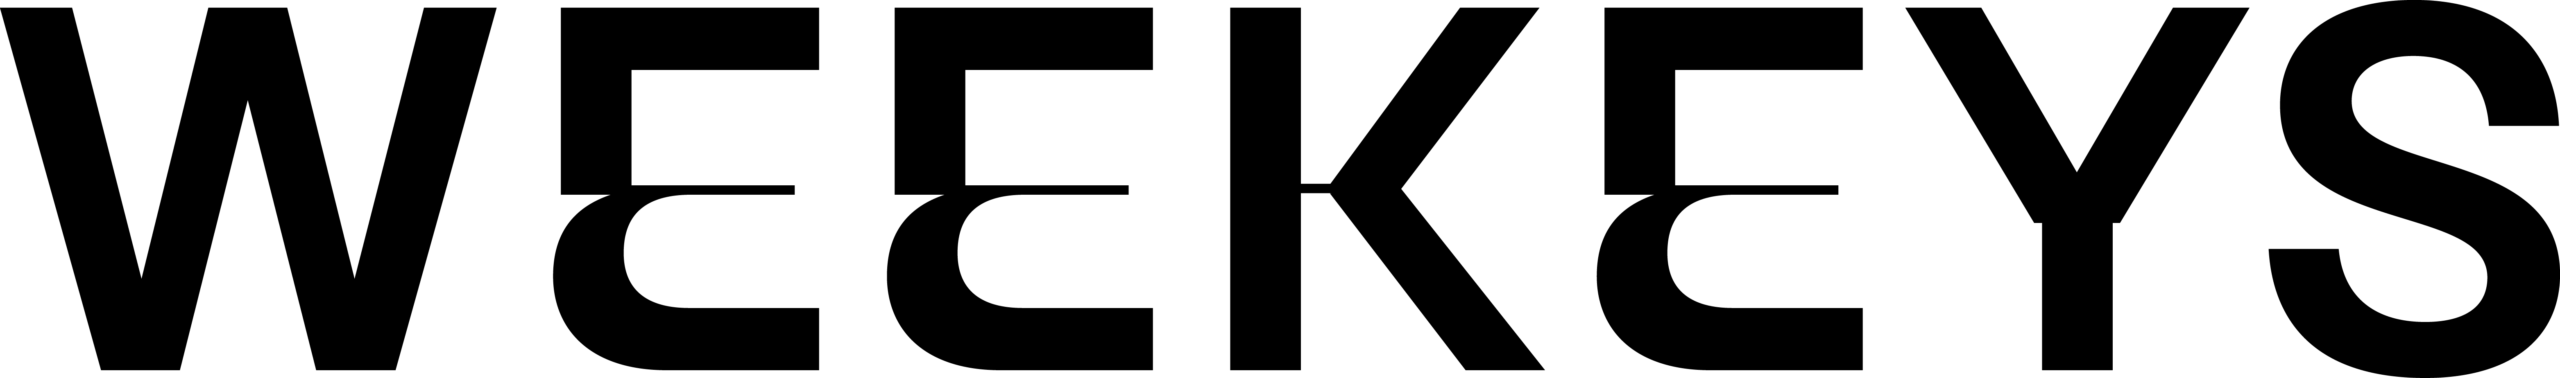 Logo Weekeys noir